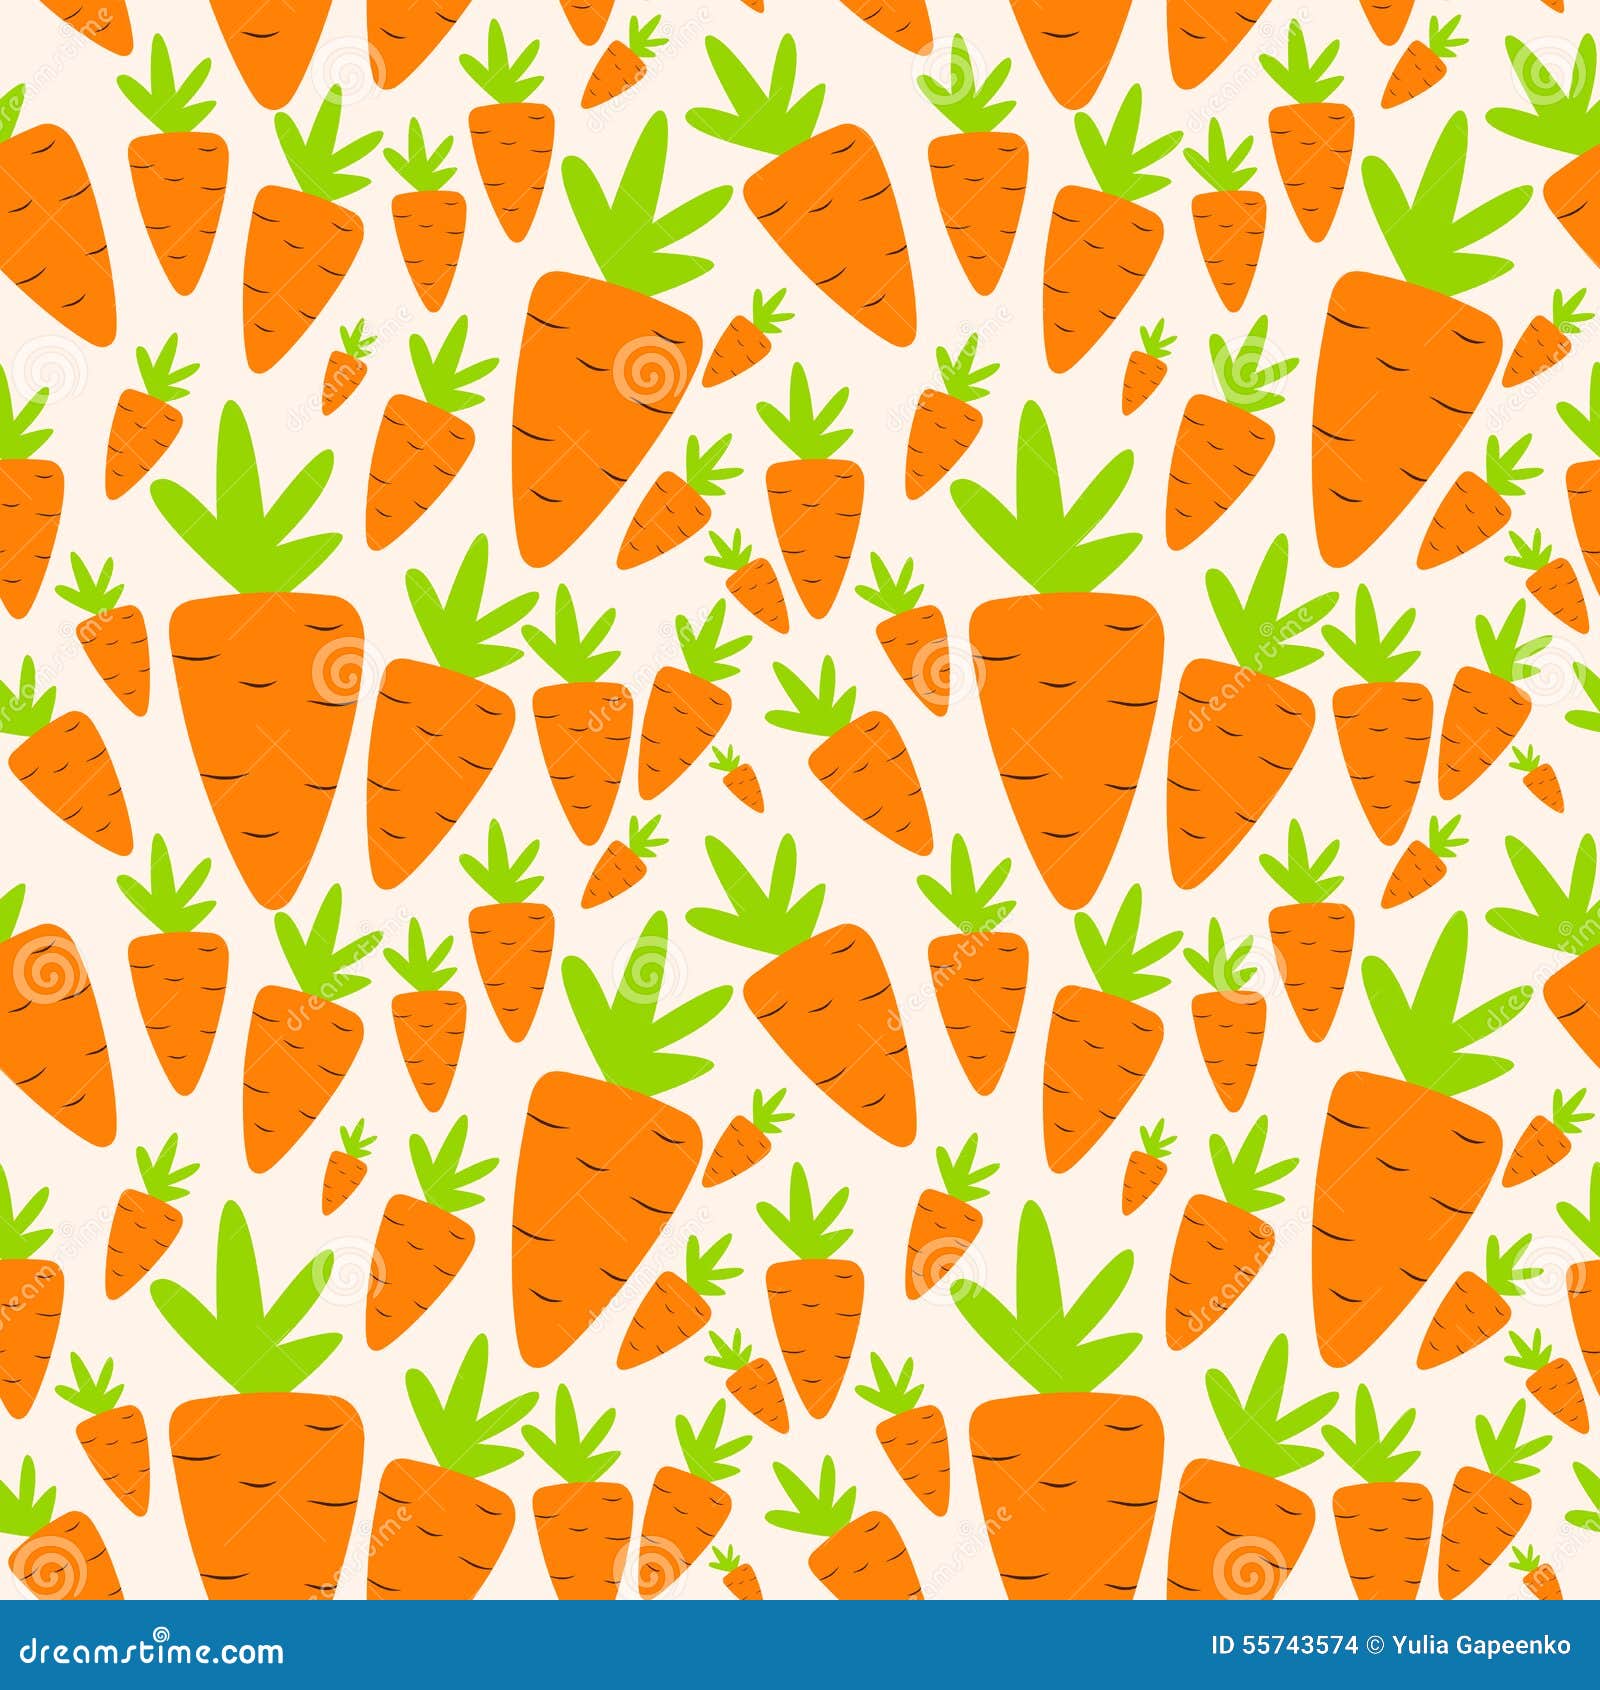 Premium Vector  Carrot pattern with orange background  Fundo de pascoa  Wallpapers bonitos Cenoura desenho